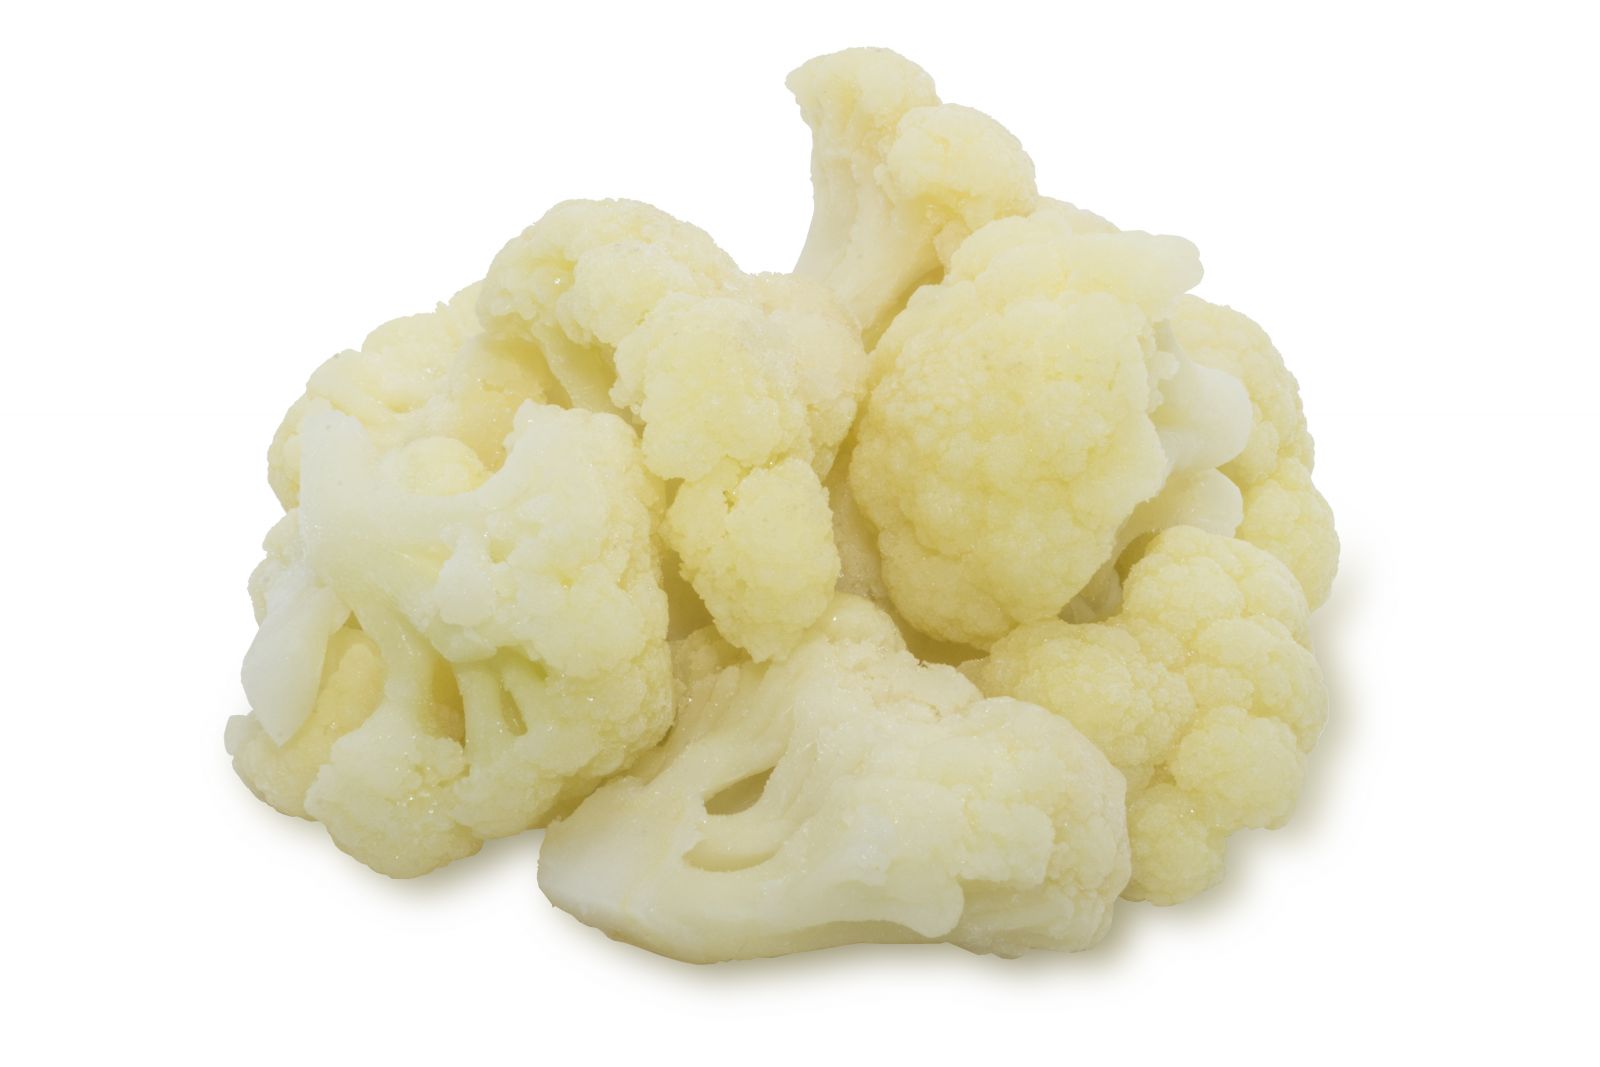 https://lavifood.com/en/products/blanching/cauliflower